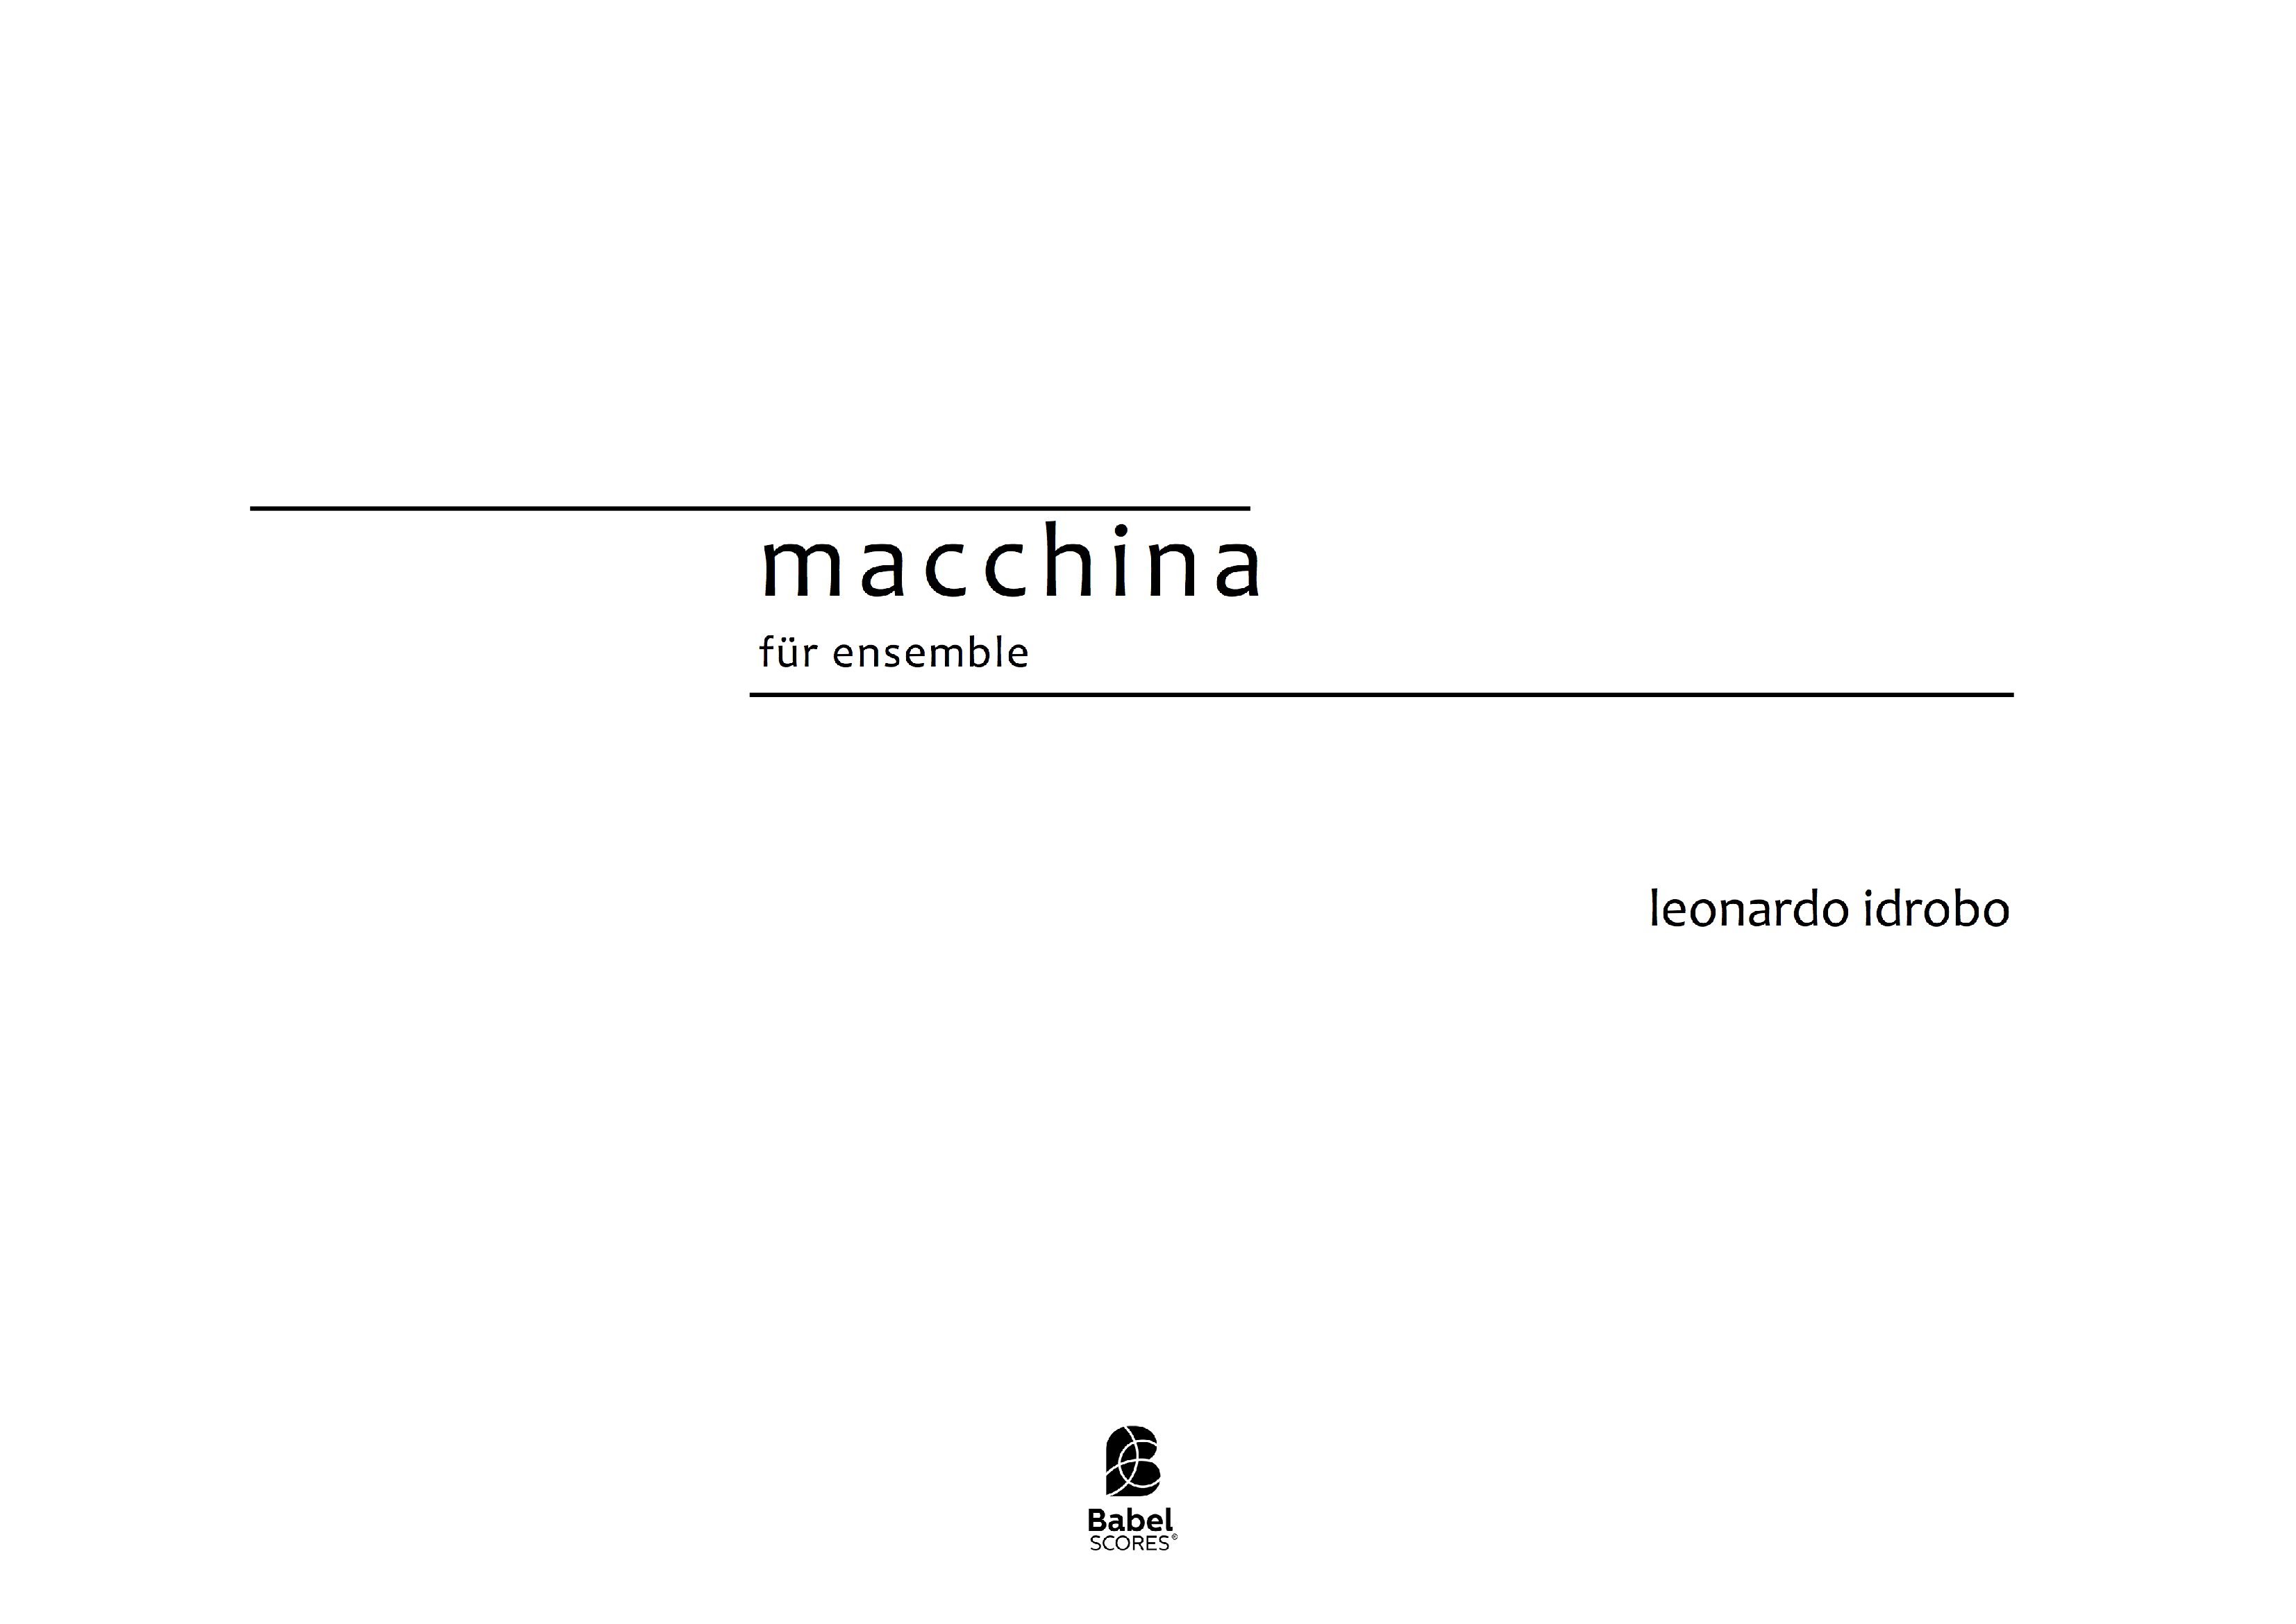 Macchina A3 z 3 1 575